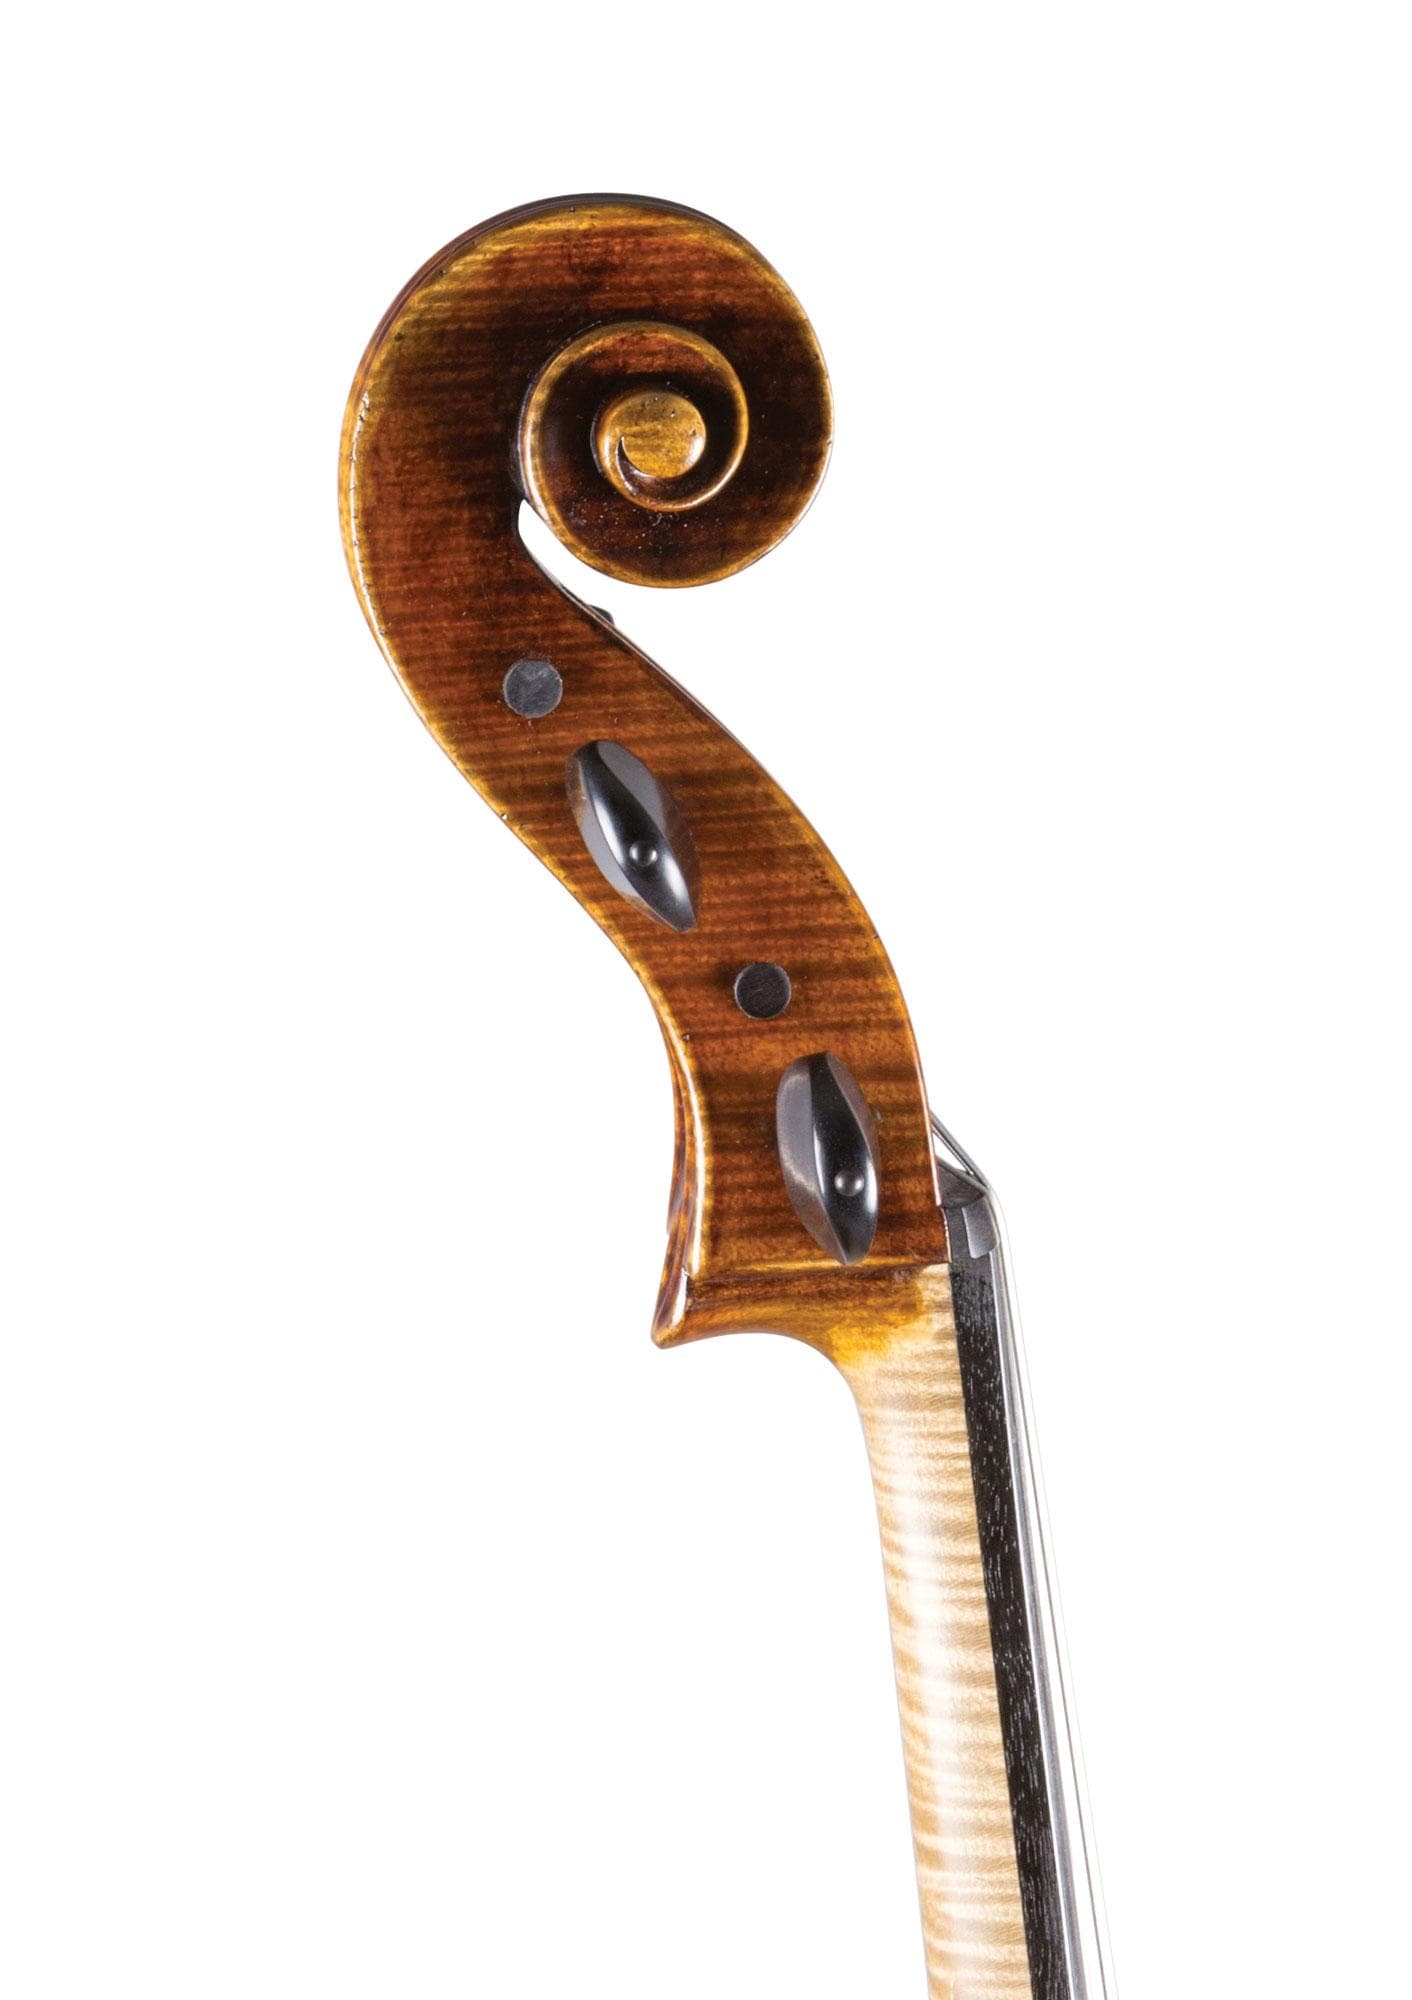 Rainer W. Leonhardt Cello, No. 60